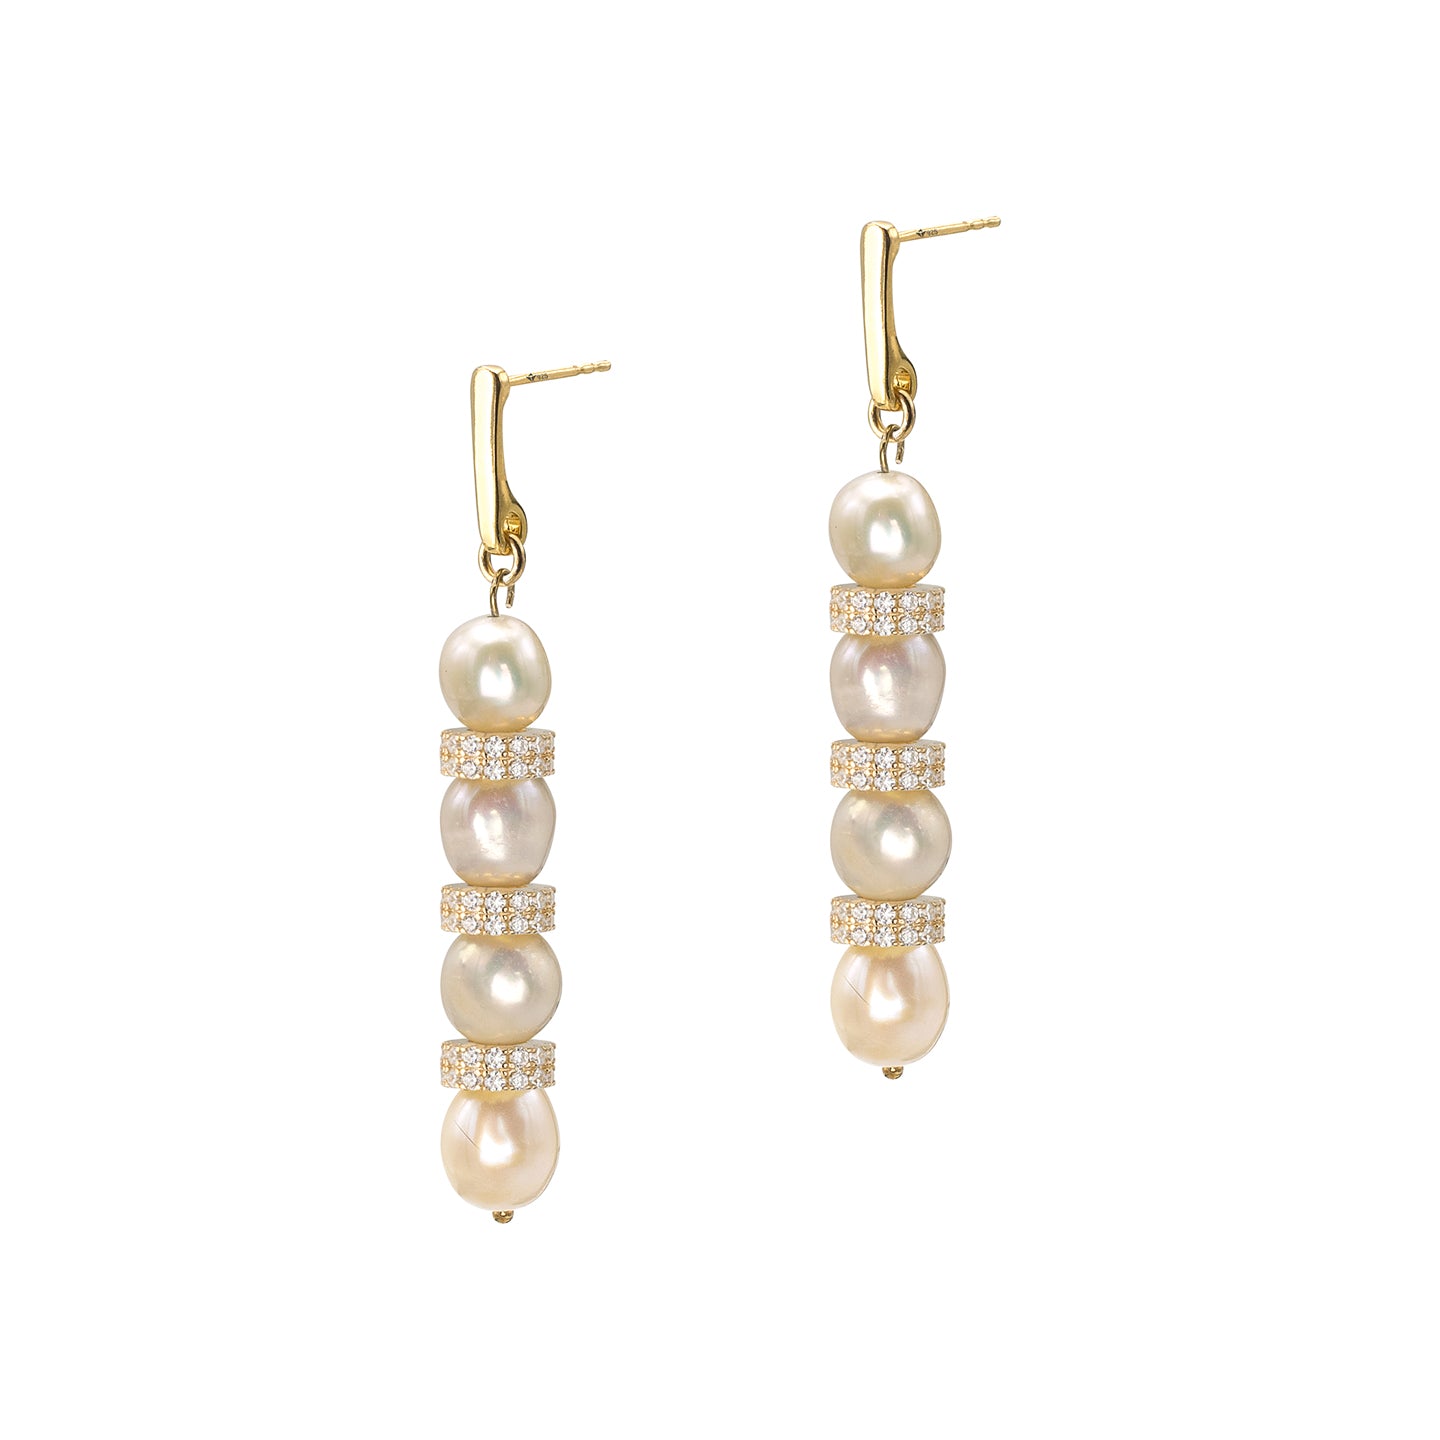 Cercei argint cu perle si pietre zirconiu Quintessence - placati aur galben 18K